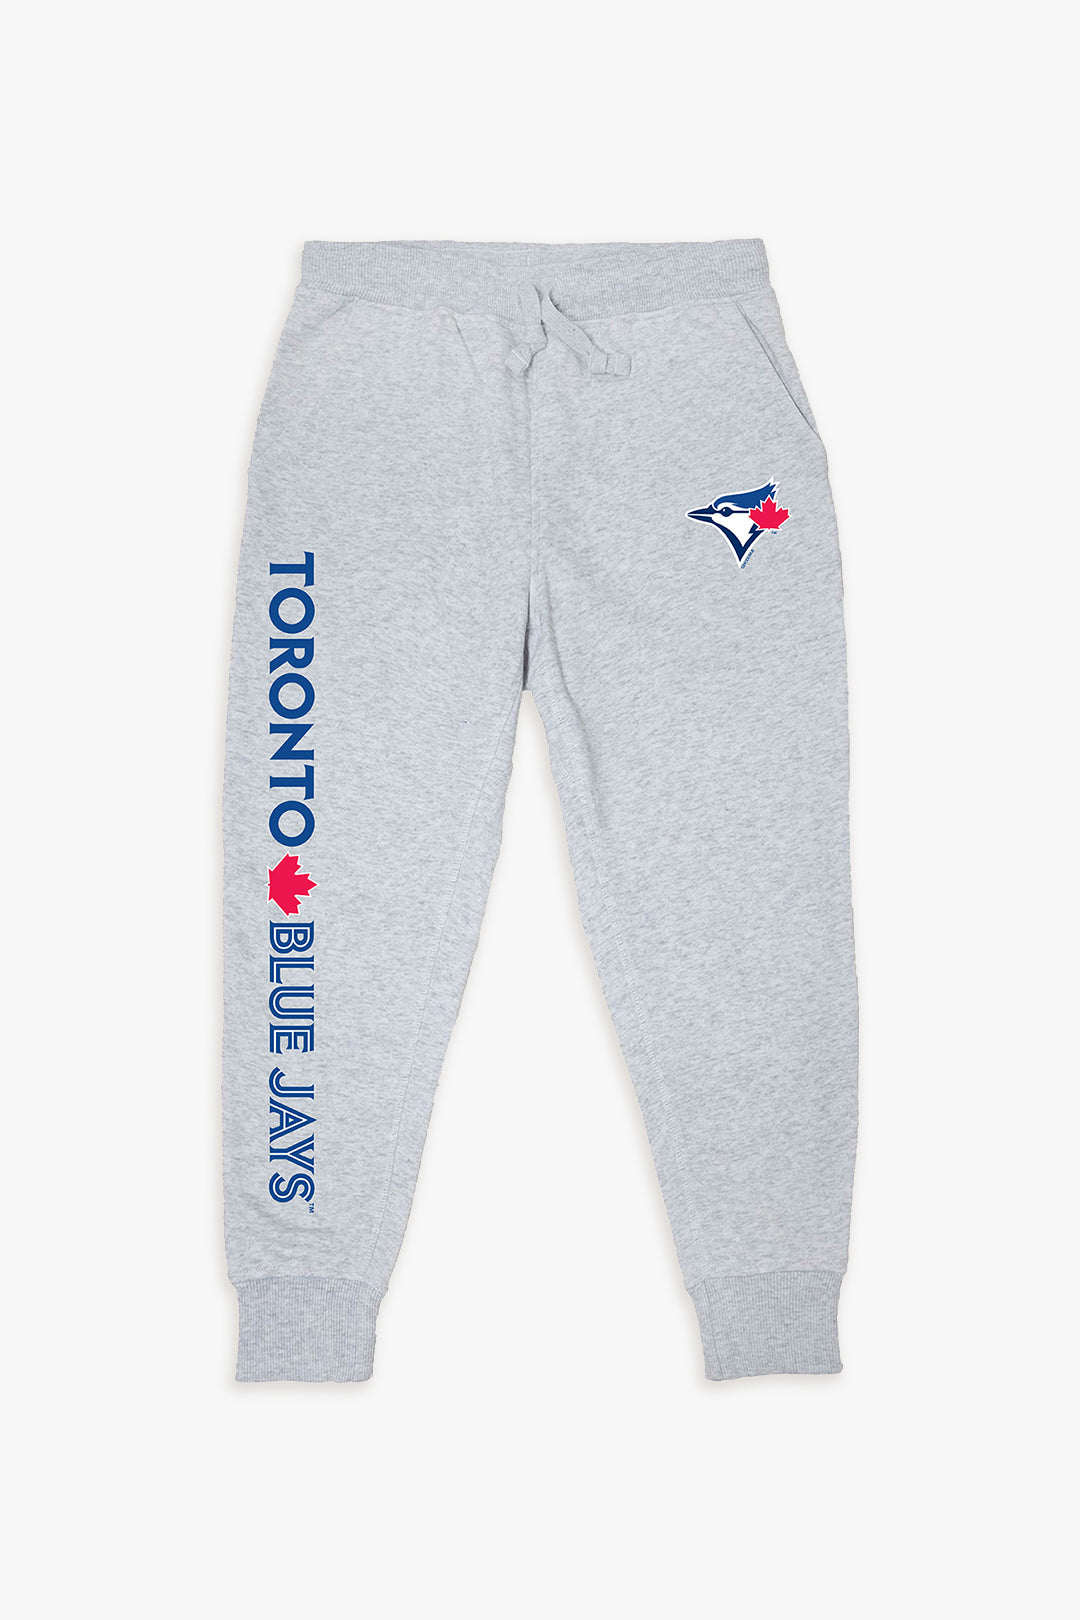 Gertex MLB Toronto Blue Jays Light Grey Kids Lounge Pants